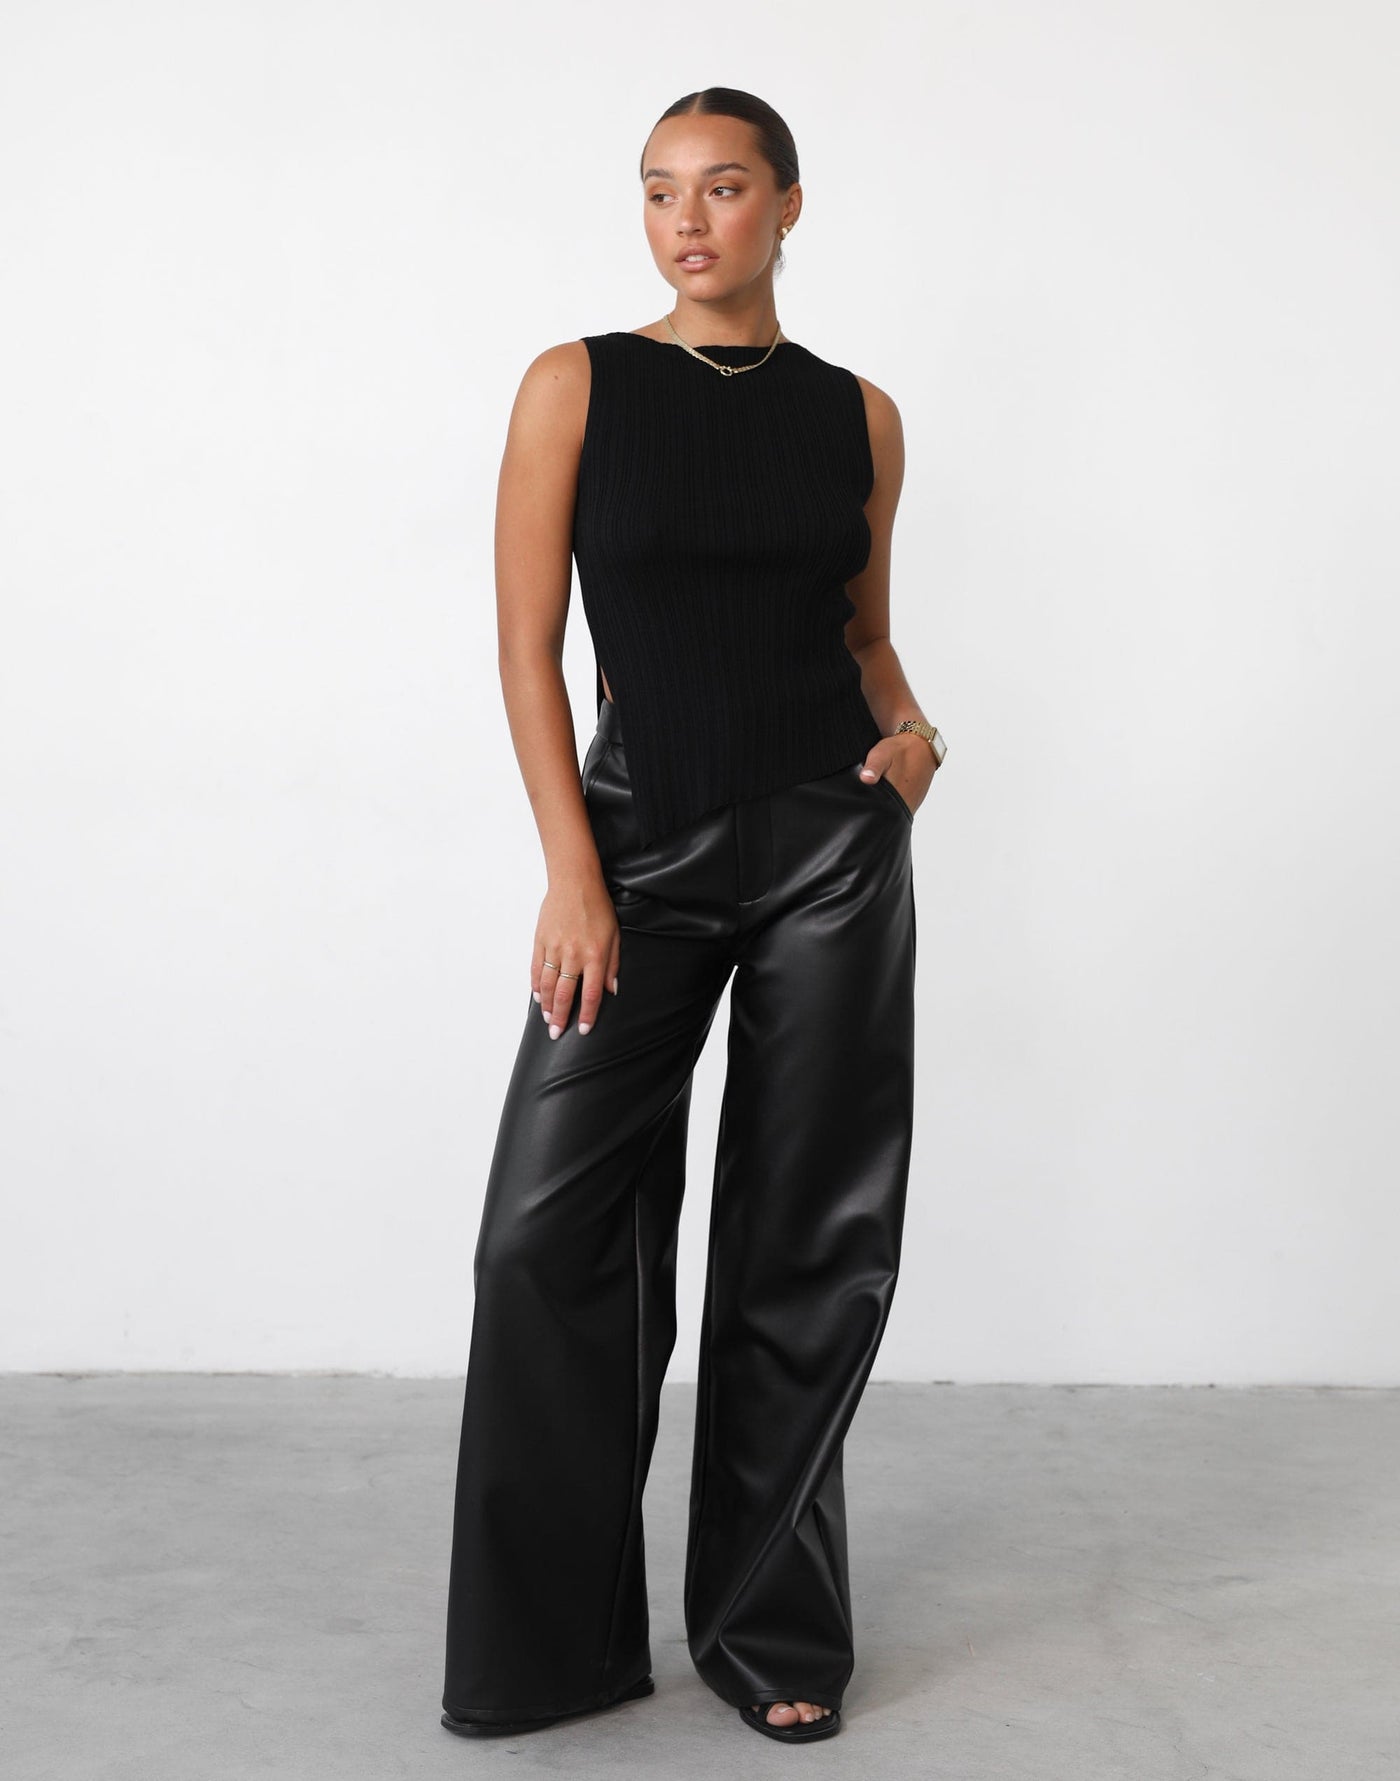 Kienna Top (Black) - Asymmetrical Ribbed Sleeveless Top - Women's Top - Charcoal Clothing